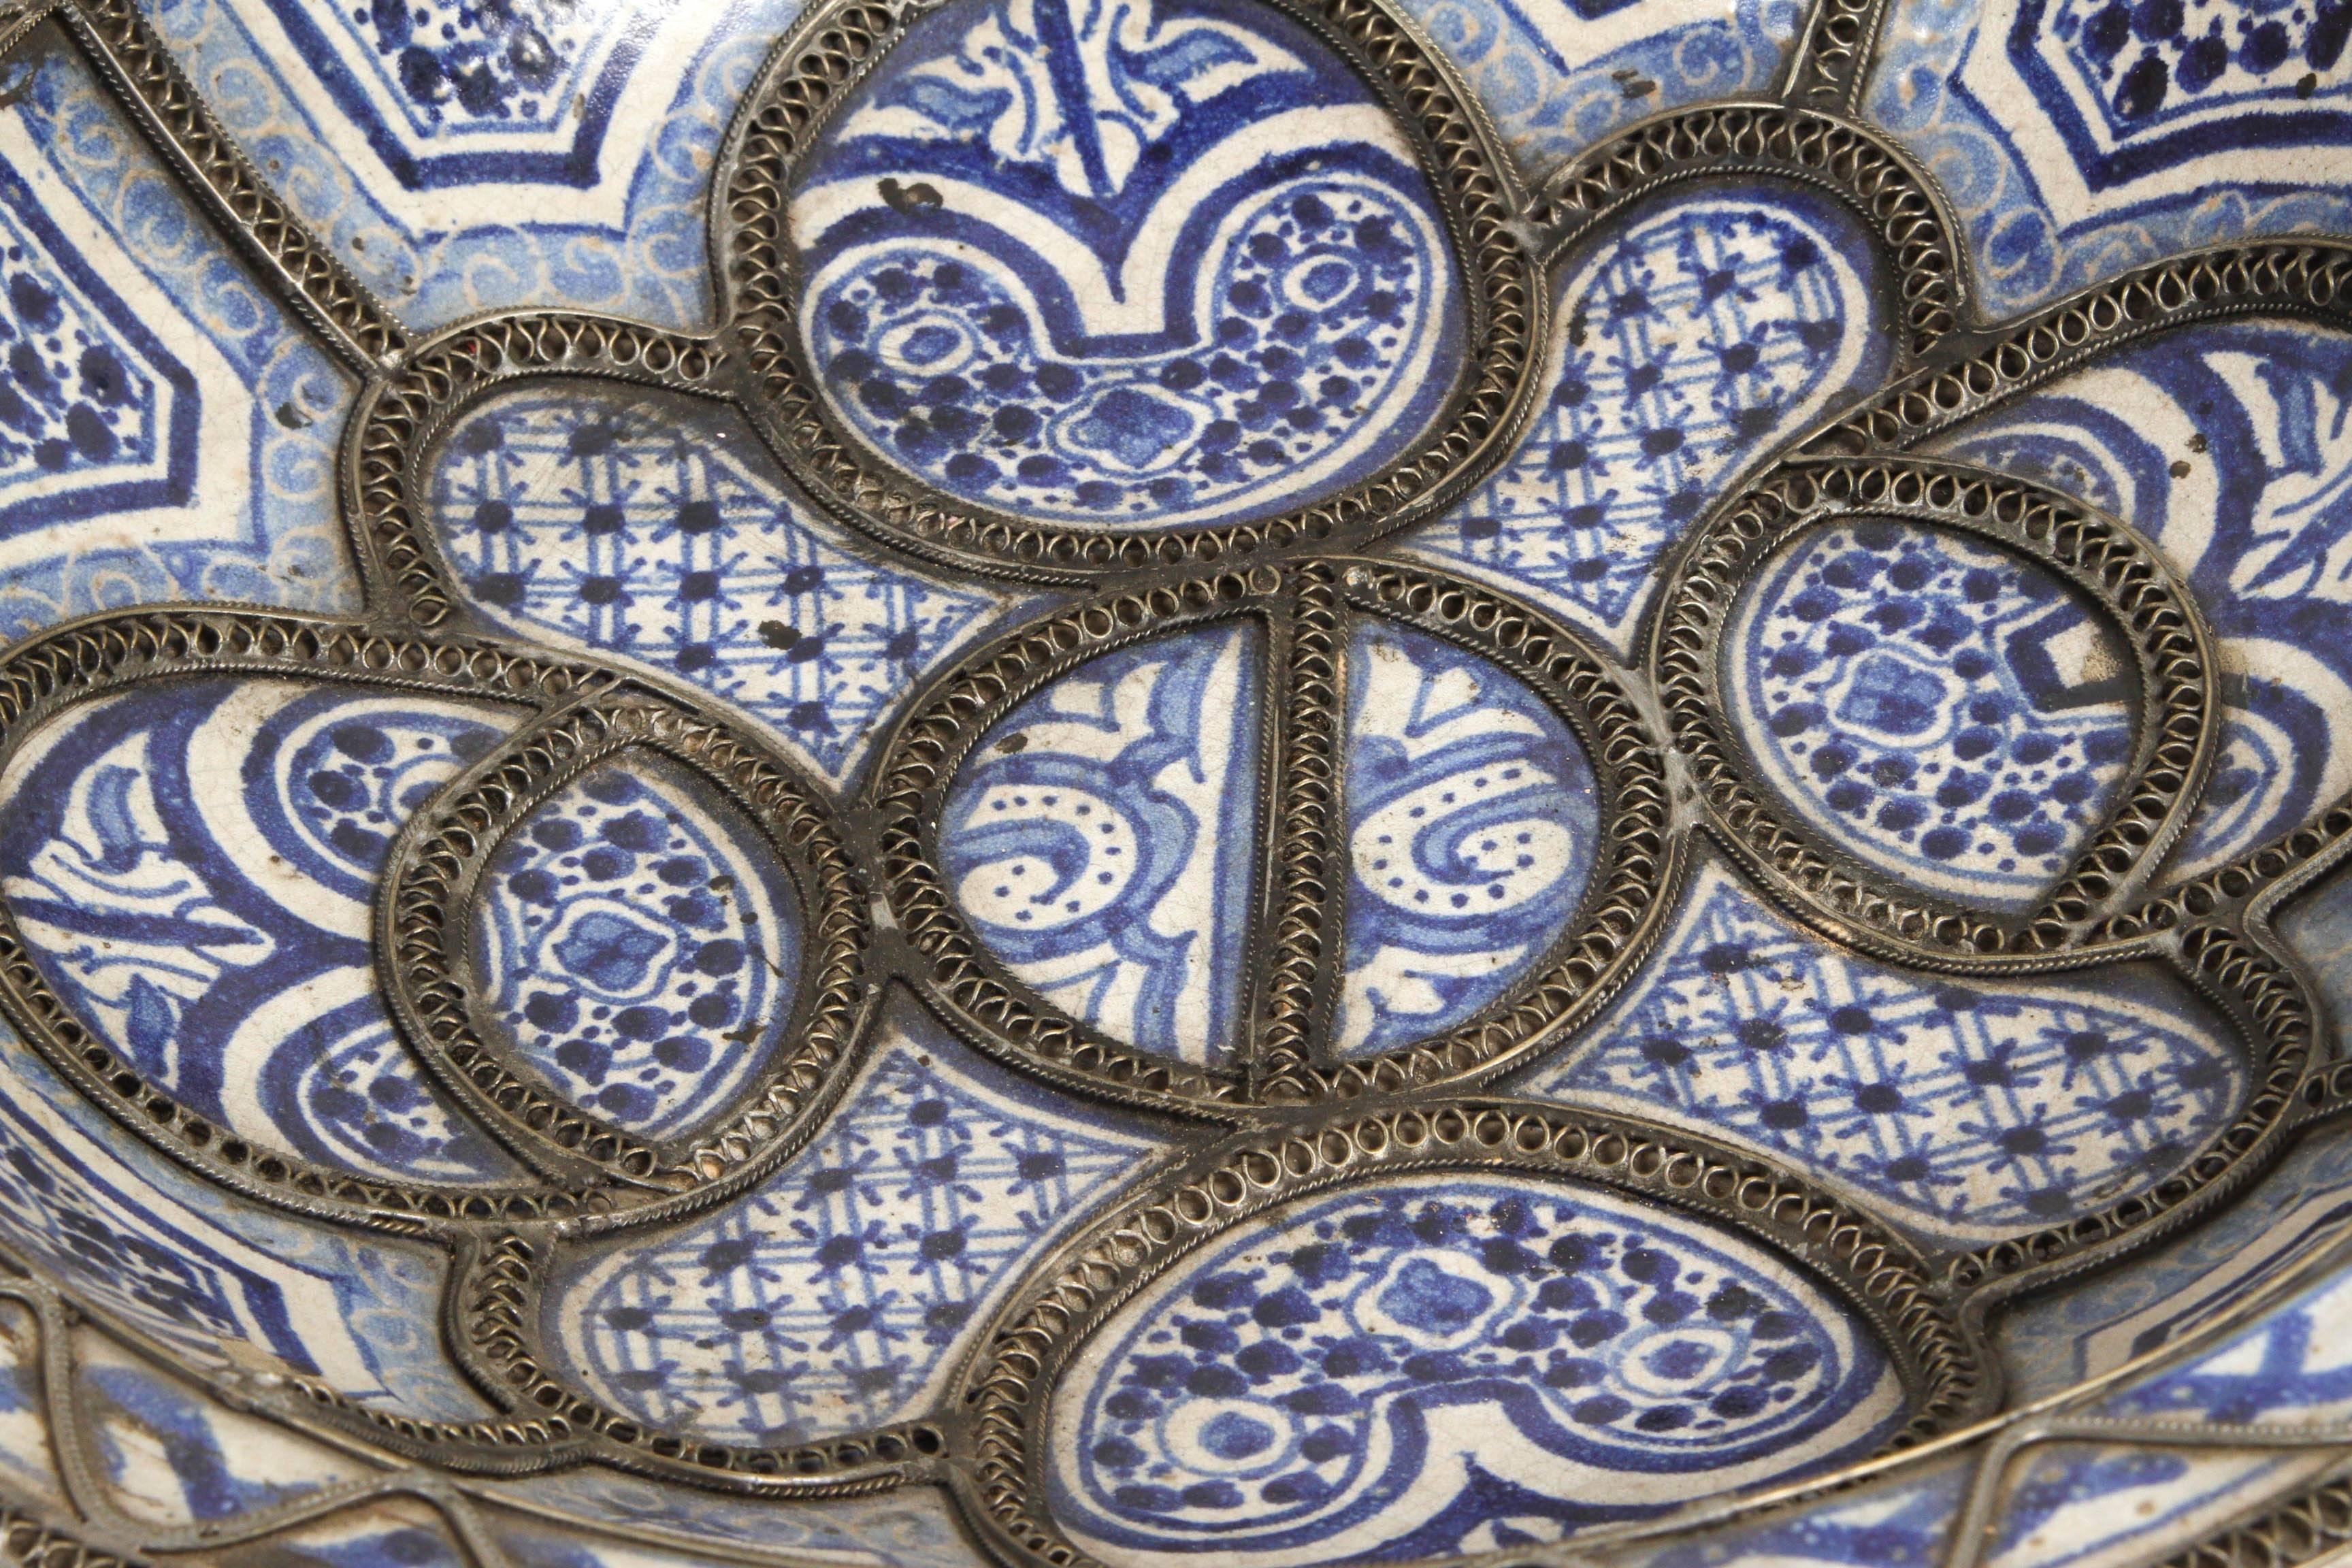 20th Century Large Decorative Ceramic Plates from Fez